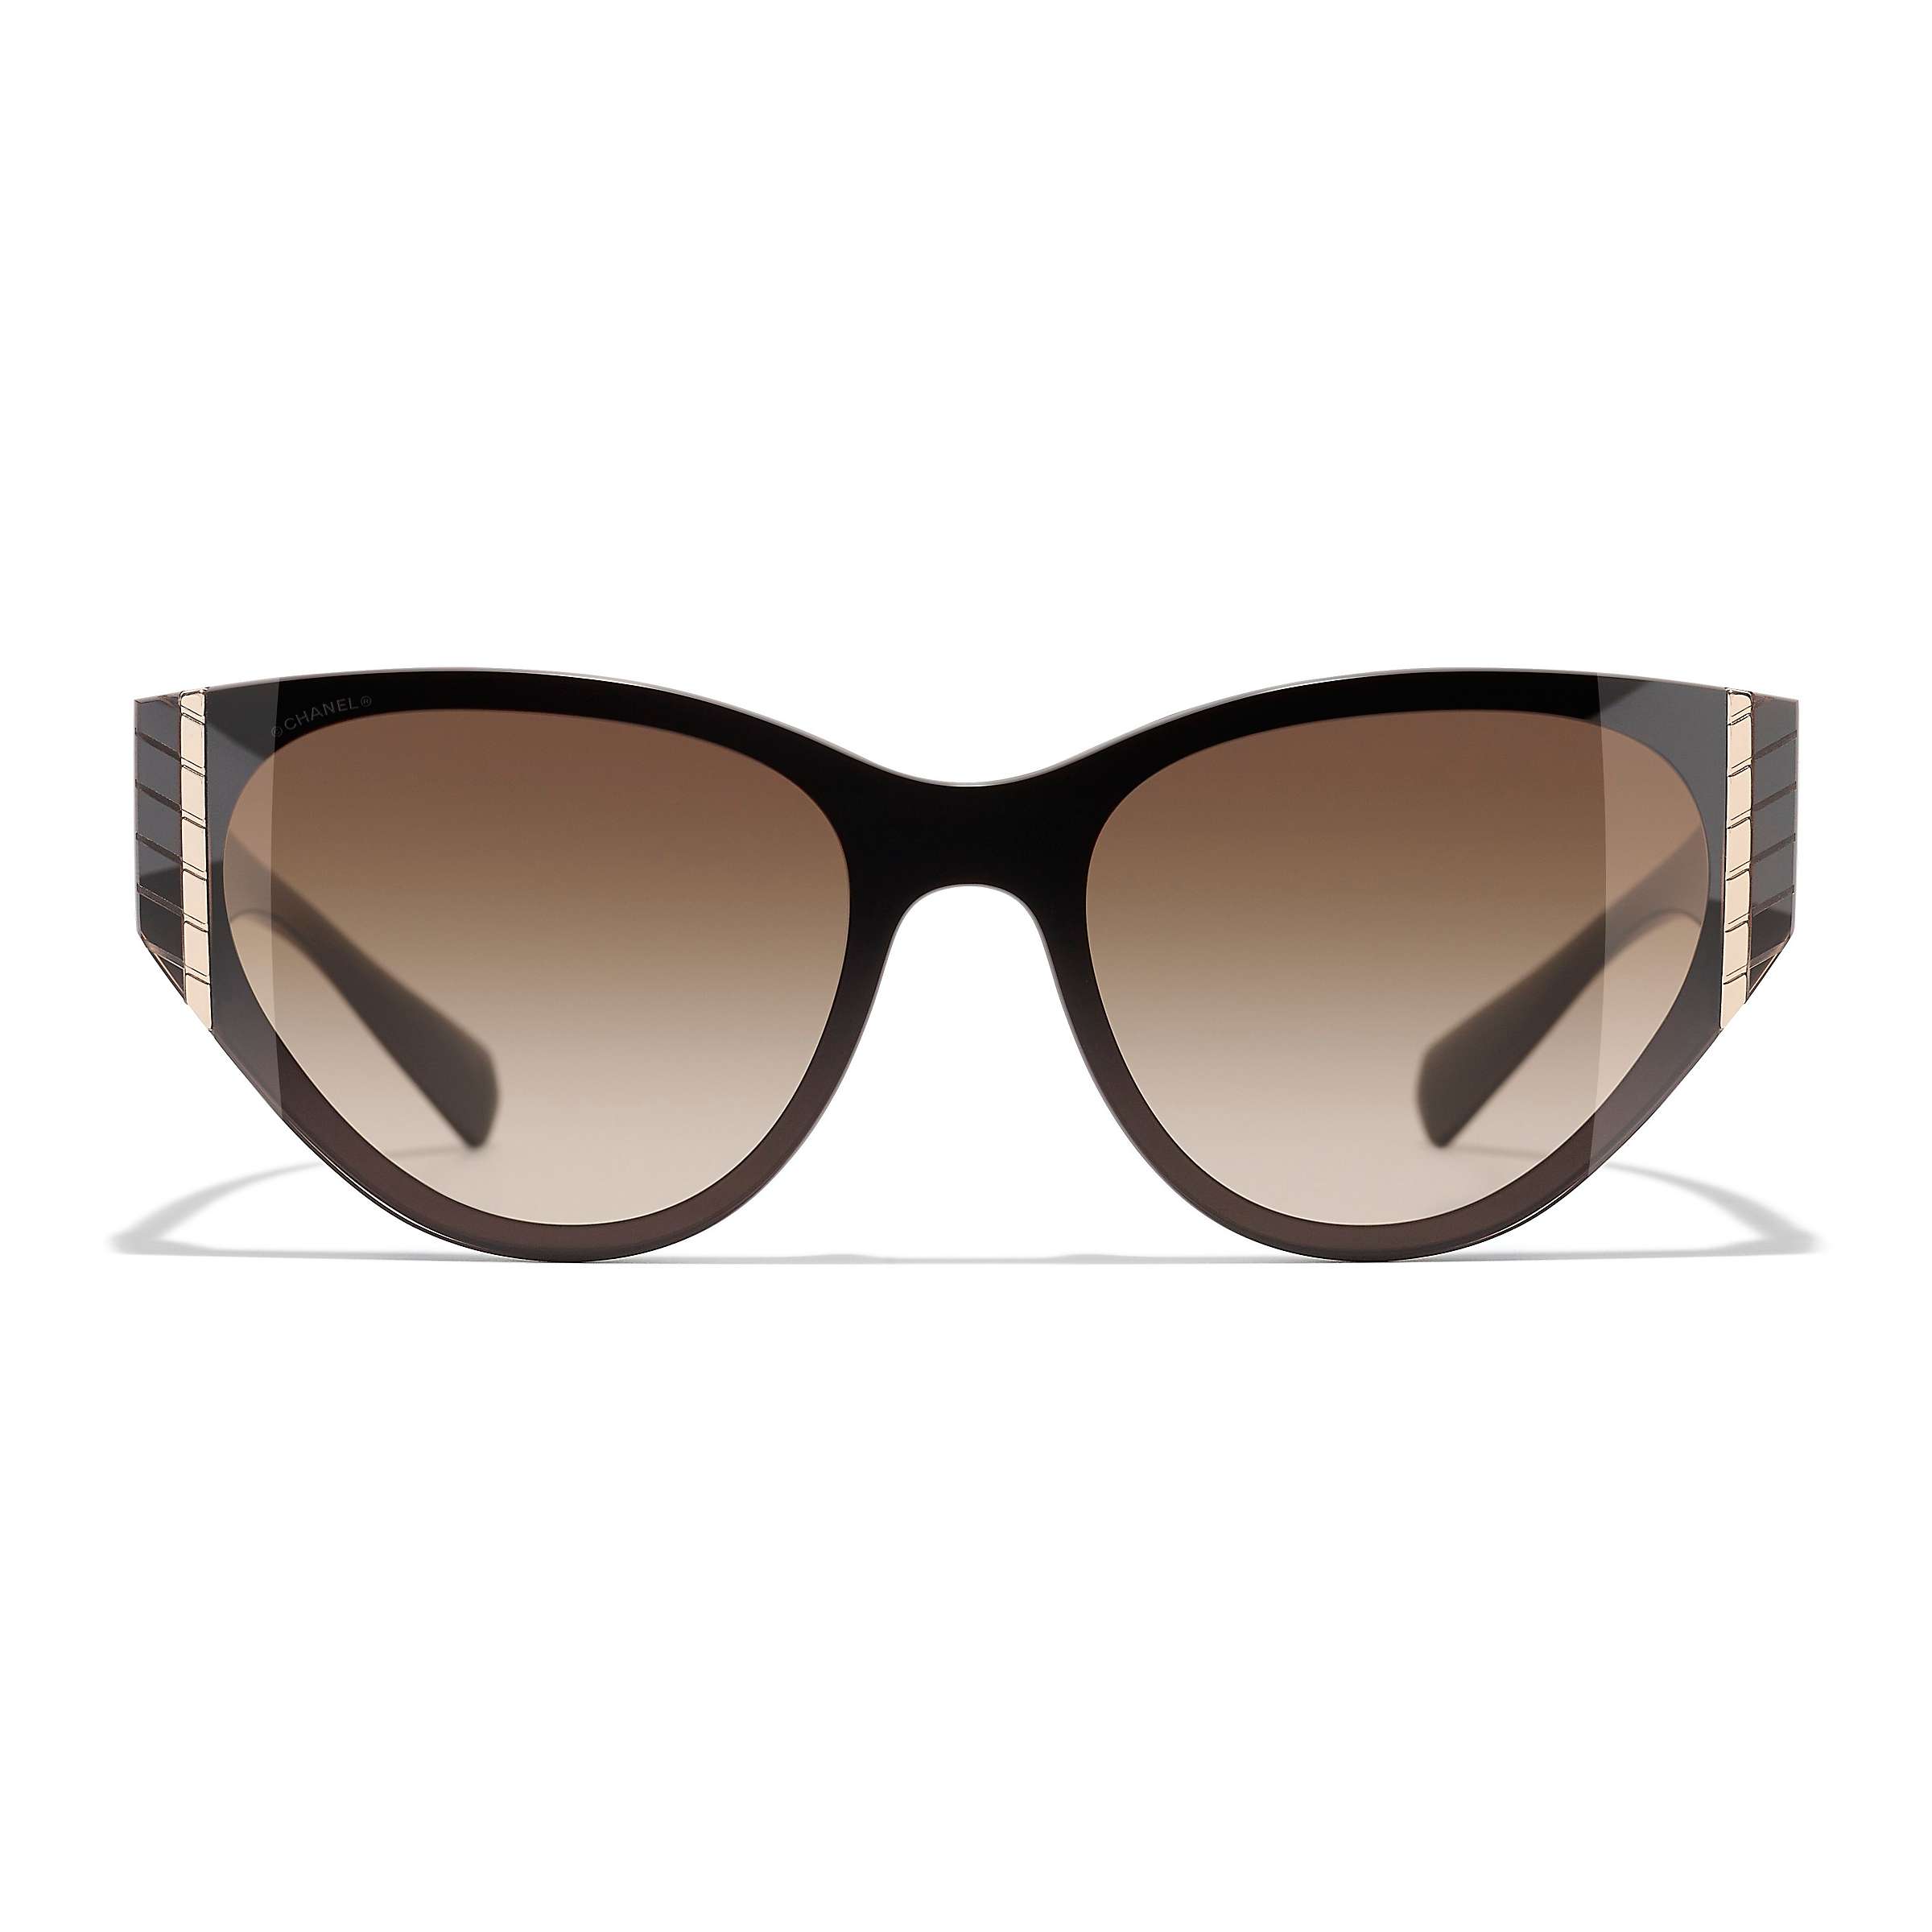 Buy CHANEL Oval Sunglasses CH6054 Dark Brown/Brown Gradient Online at johnlewis.com